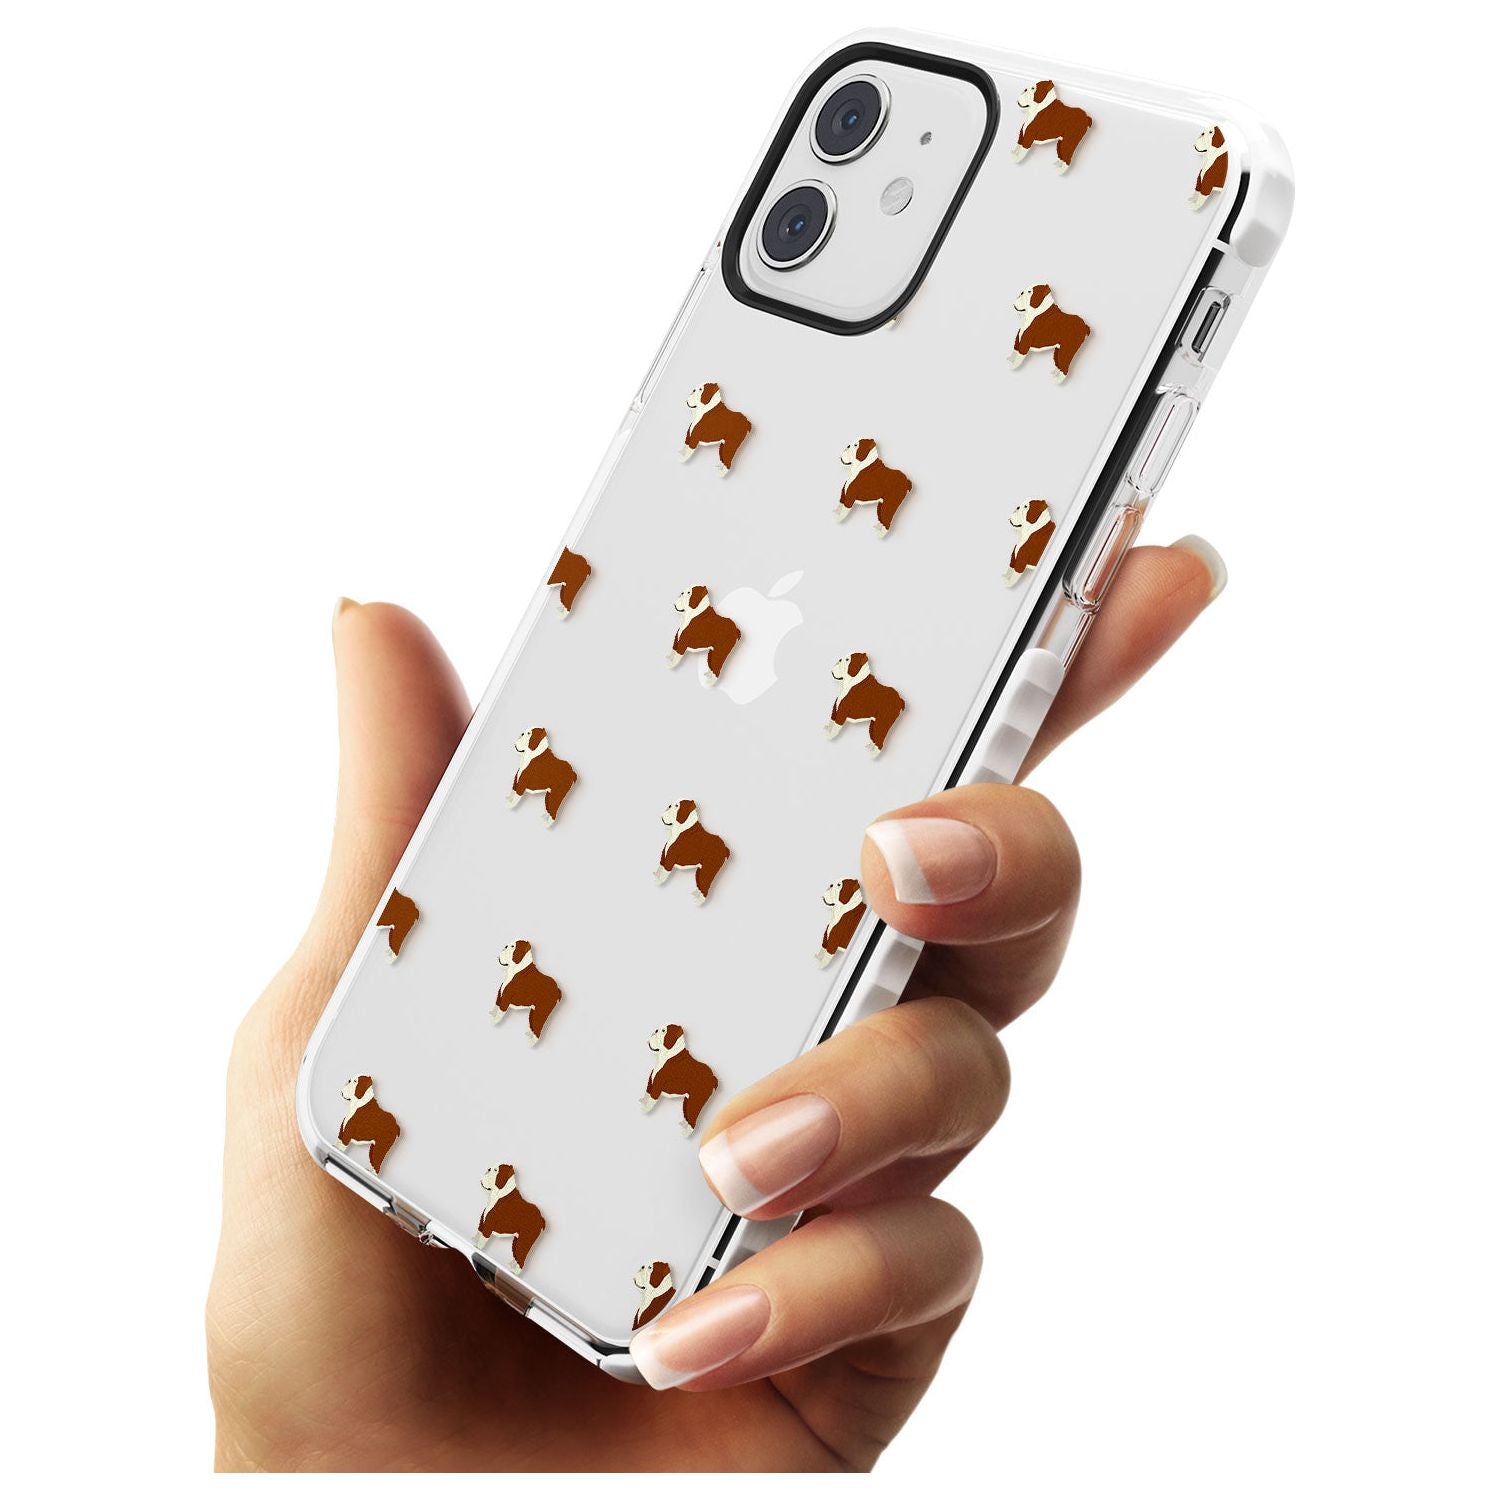 English Bulldog Dog Pattern Clear Impact Phone Case for iPhone 11